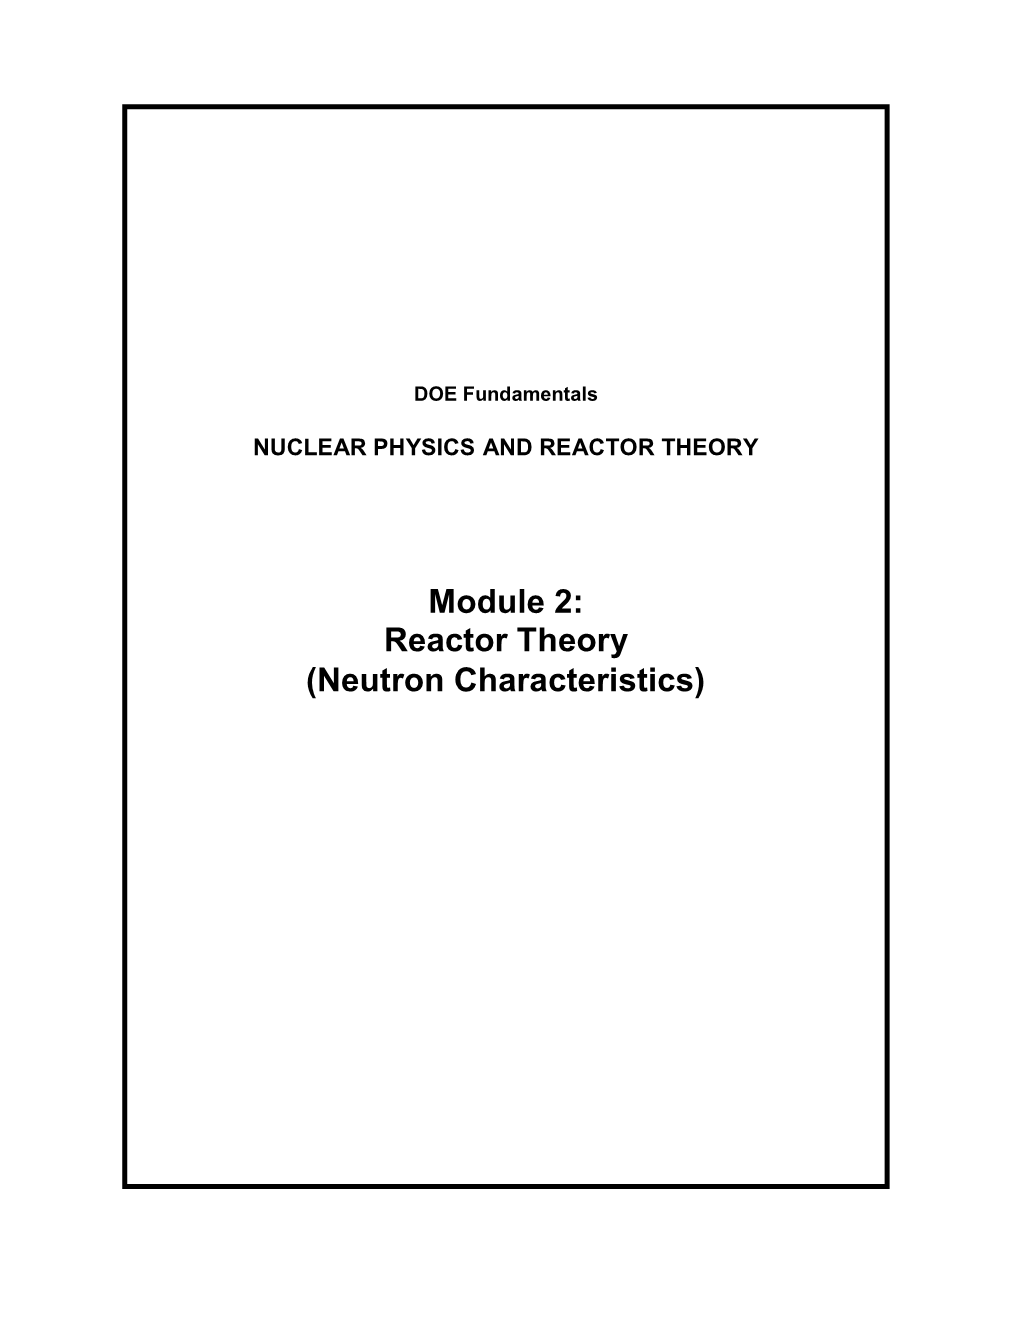 Module 2: Reactor Theory (Neutron Characteristics)